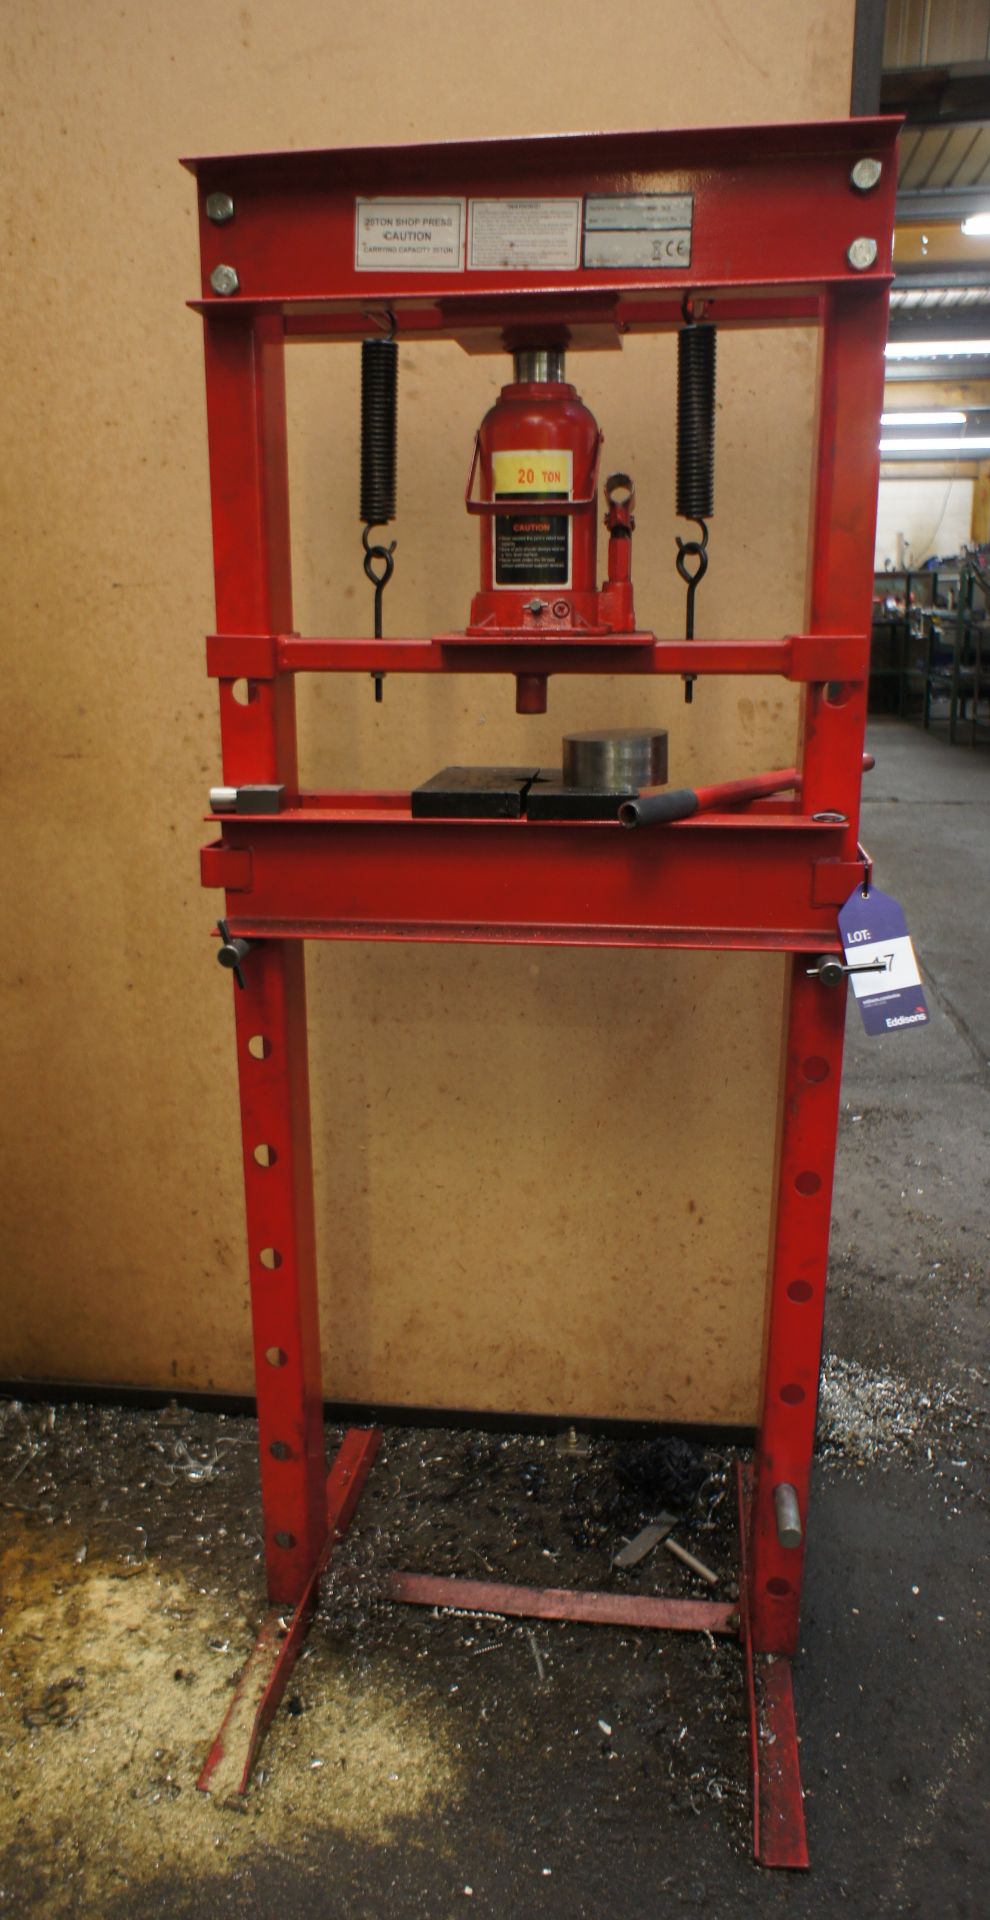 HS20T-OY Workshop Press, 20 ton - Image 2 of 3